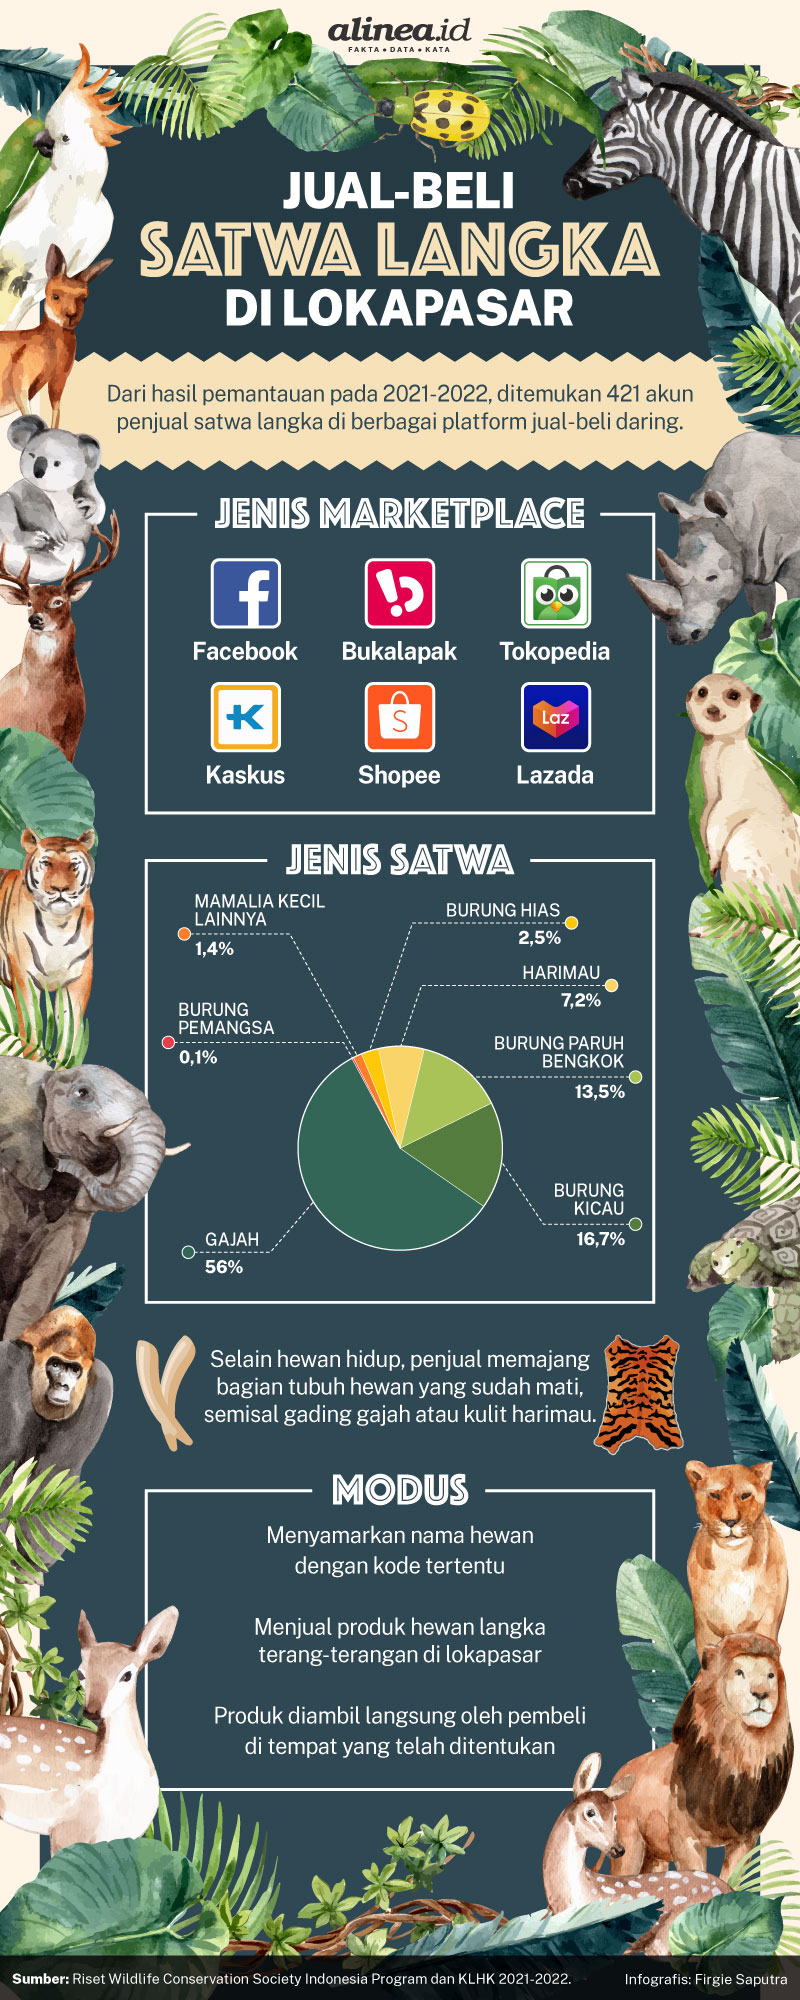 Infografik Alinea.id/Firgie Saputra